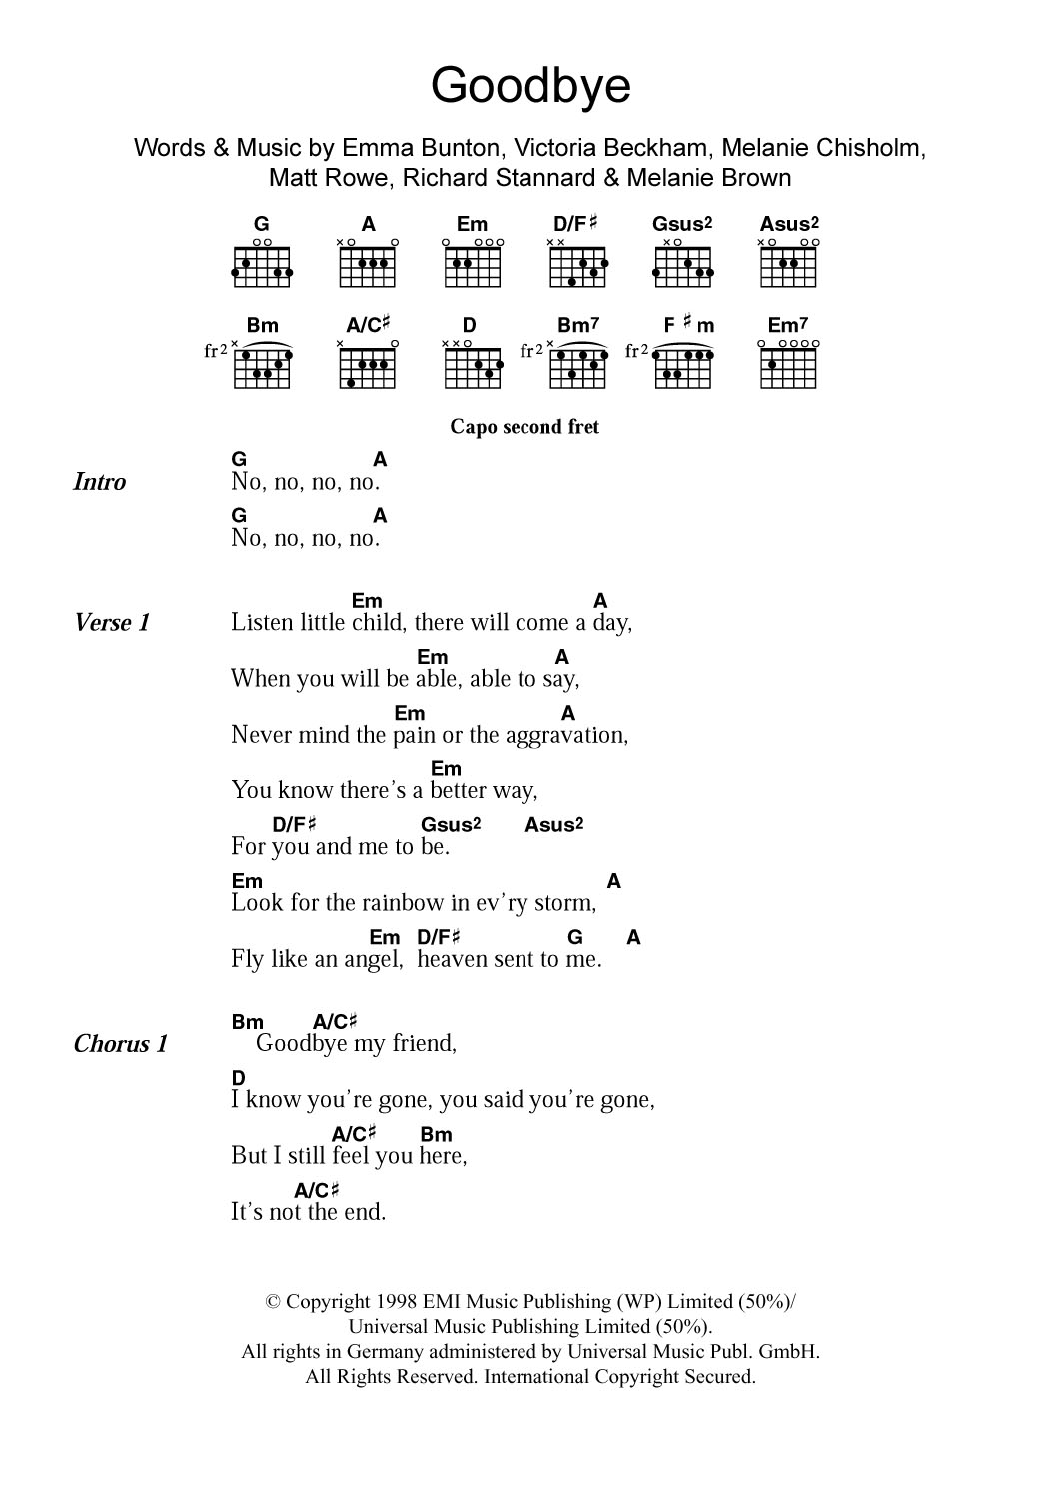 Spice Girls Goodbye Sheet Music Notes & Chords for Guitar Chords/Lyrics - Download or Print PDF